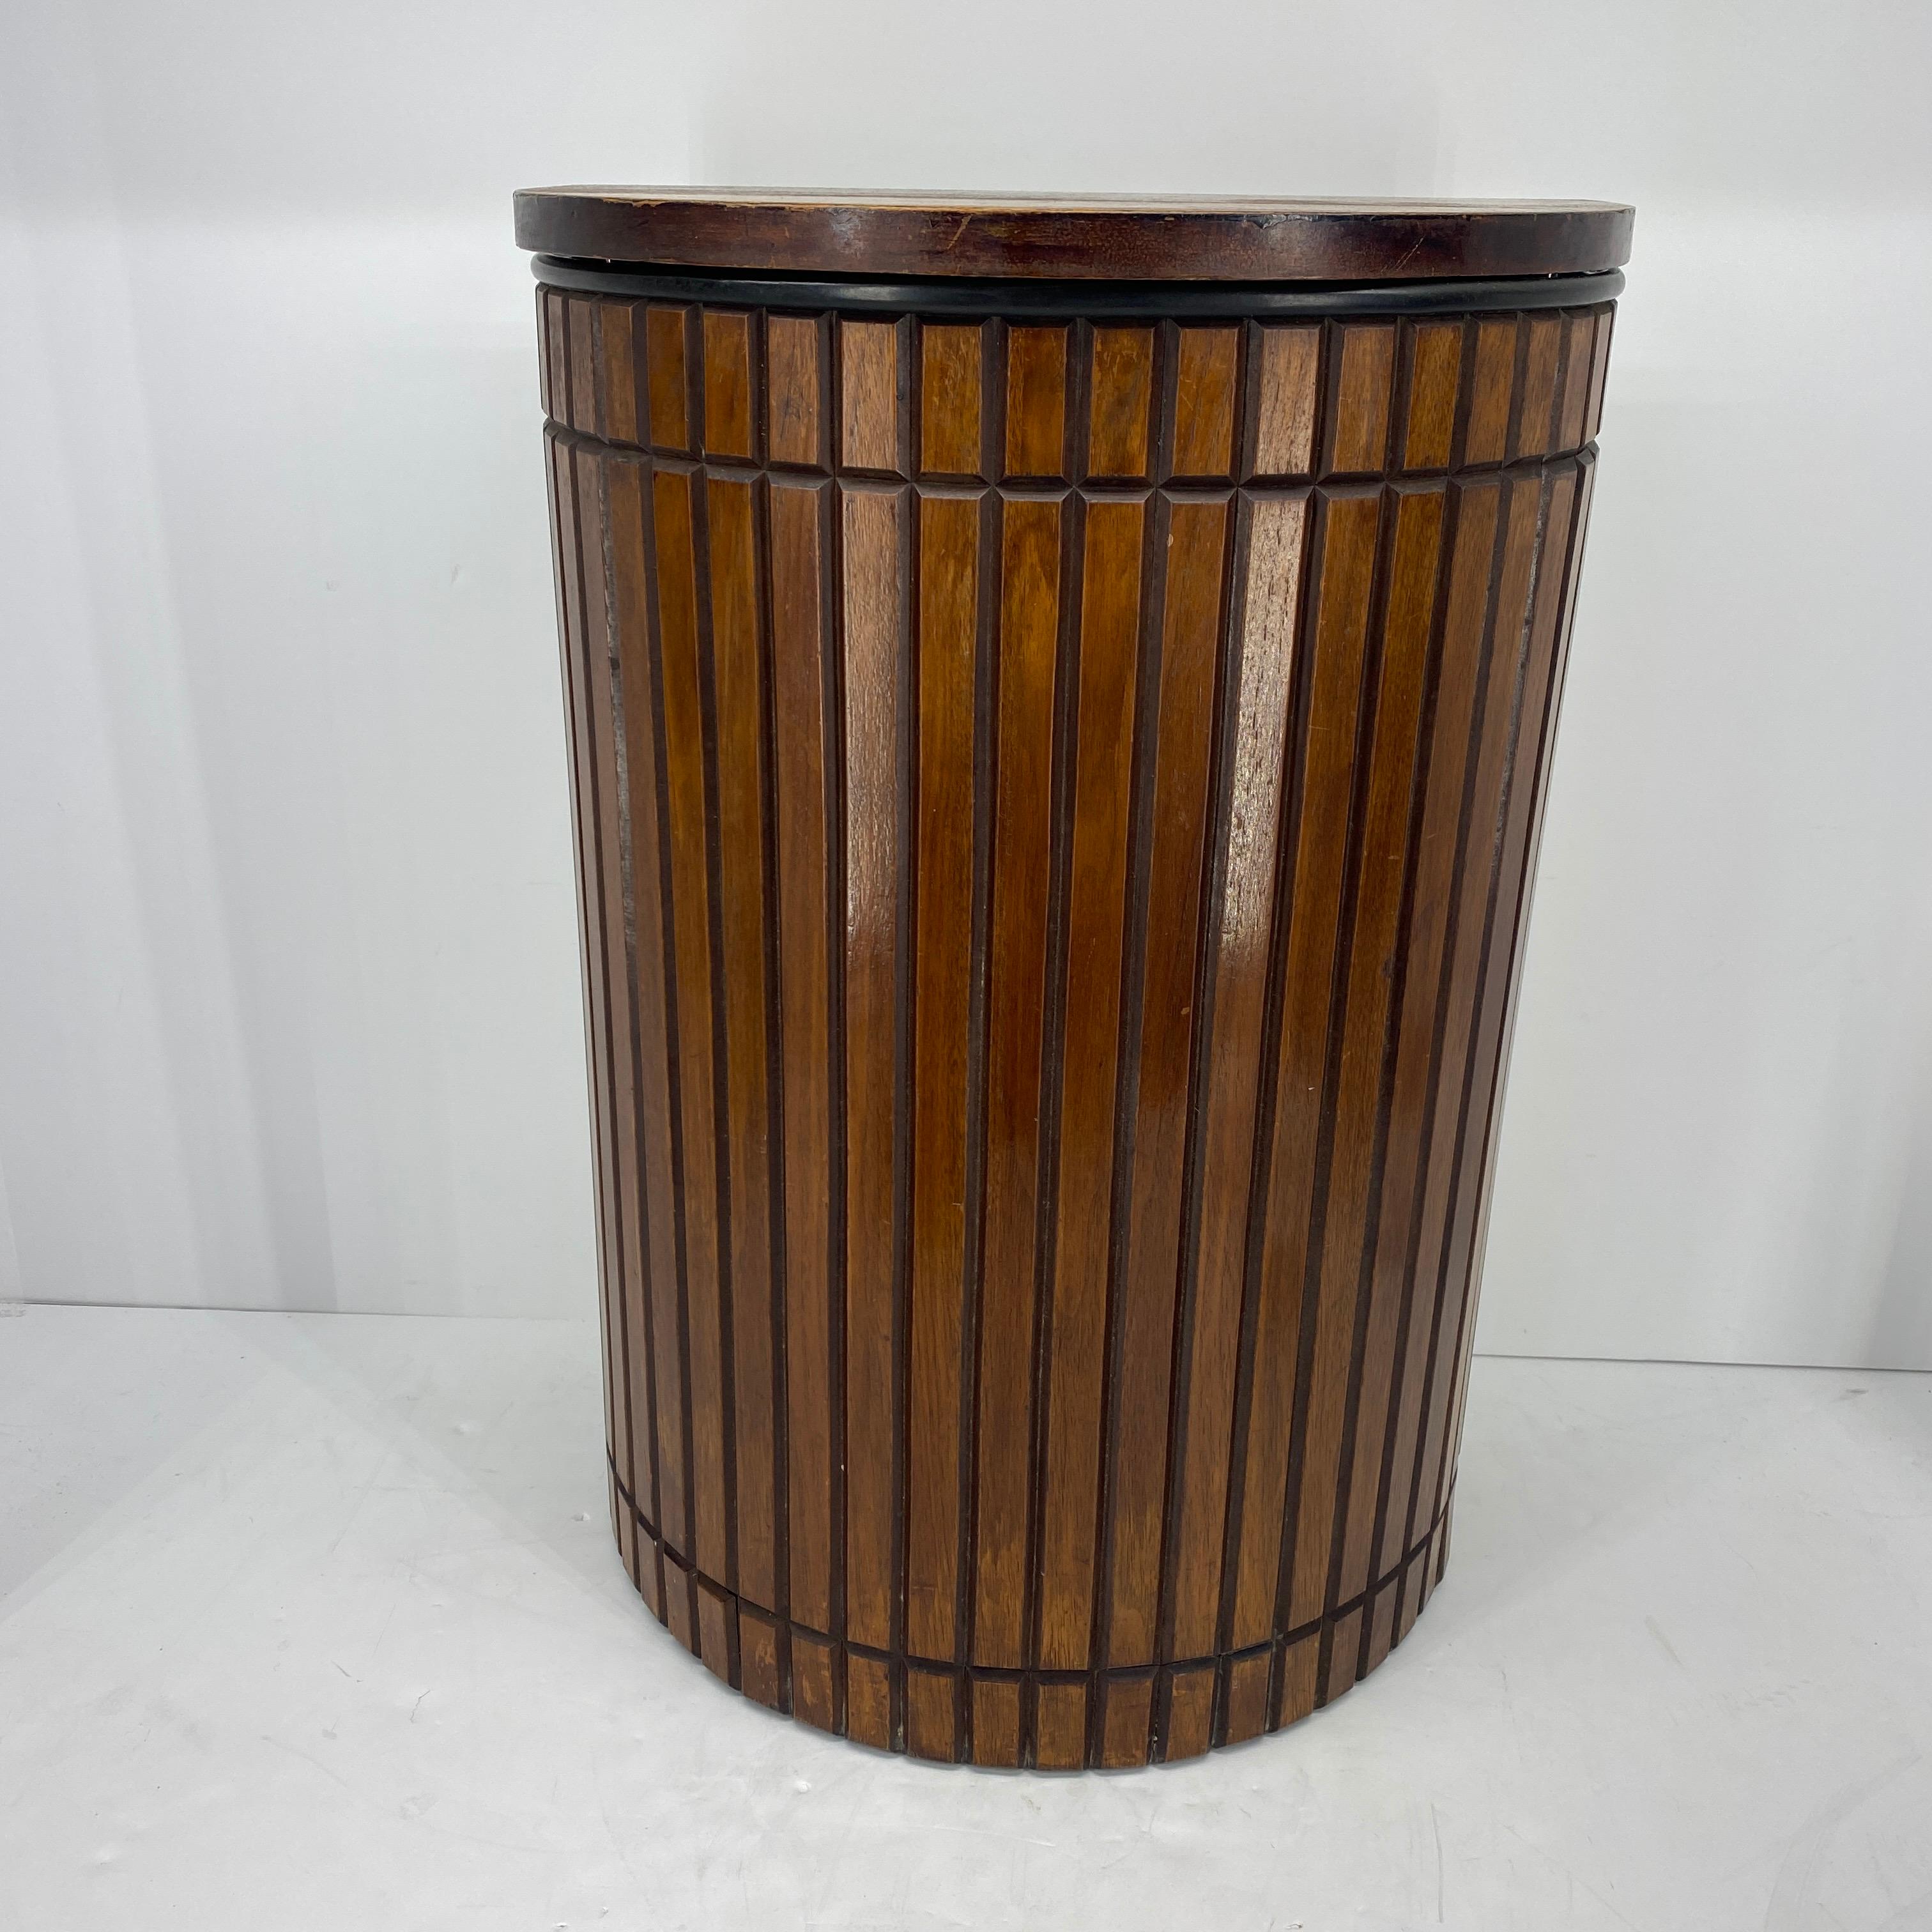 Hand-Crafted Mid-Century Modern Walnut Bathroom Hamper and Wastebasket Set, Circa 1960's